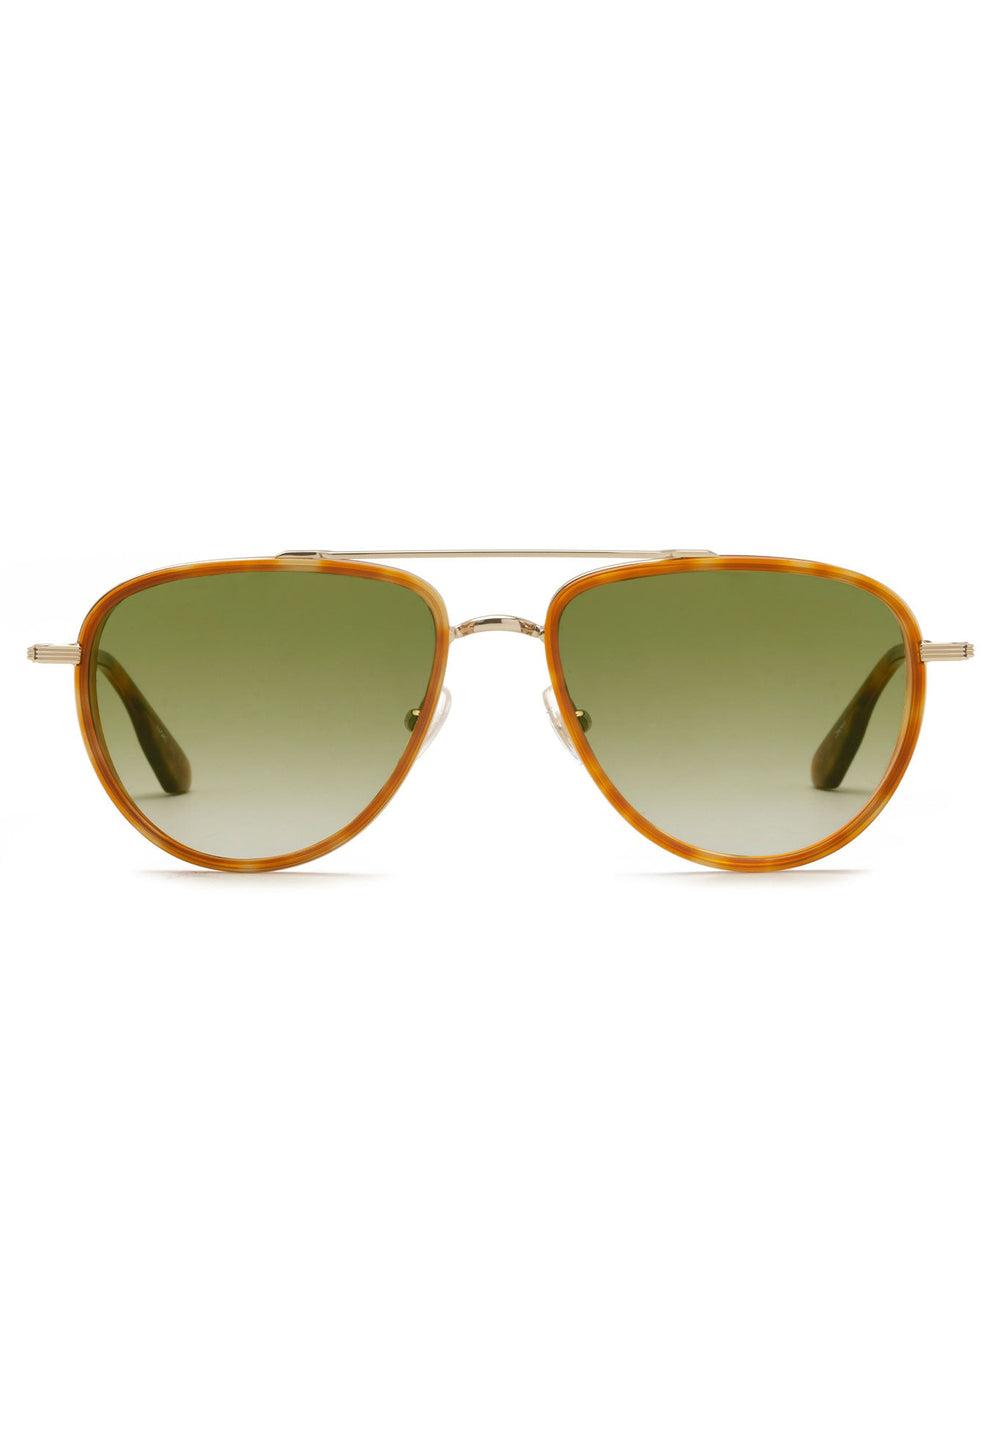 KREWE SUNGLASSS - COLEMAN | 12K + Amaro + Custom Vanity Tint handcrafted, luxury orange aviator with custom green gradient tinted lenses 